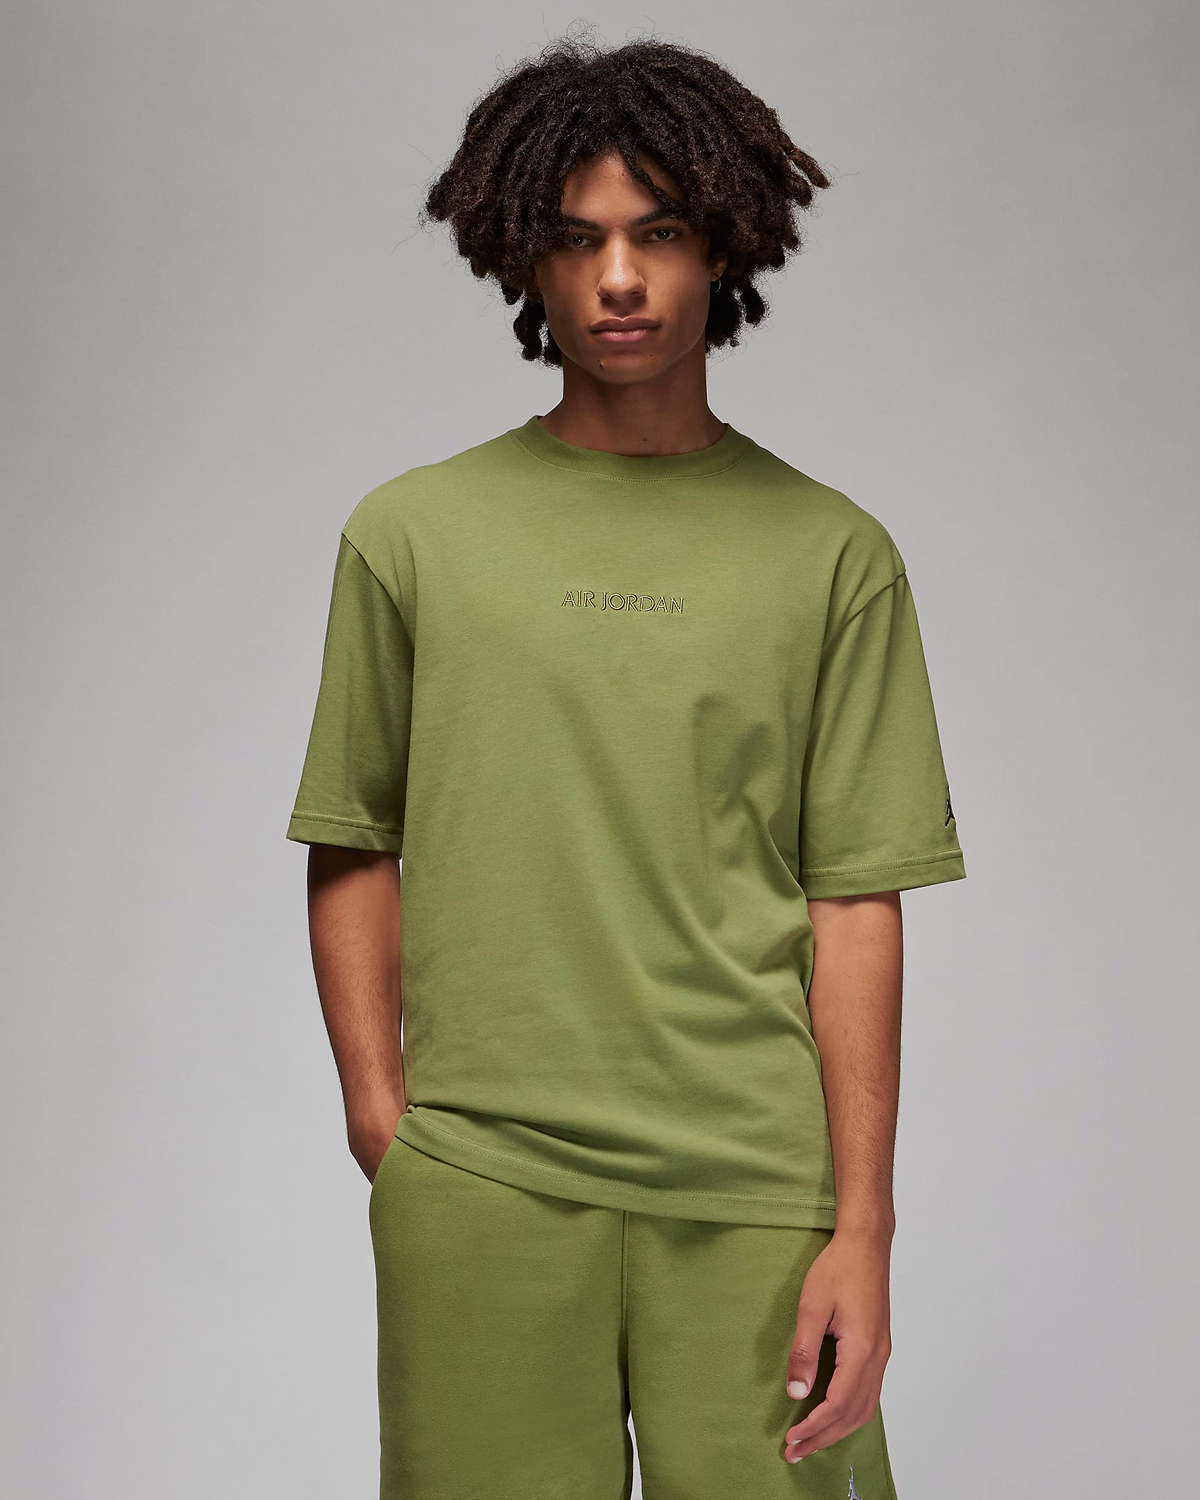 Jordan-Wordmark-T-Shirt-Olive-Green-1